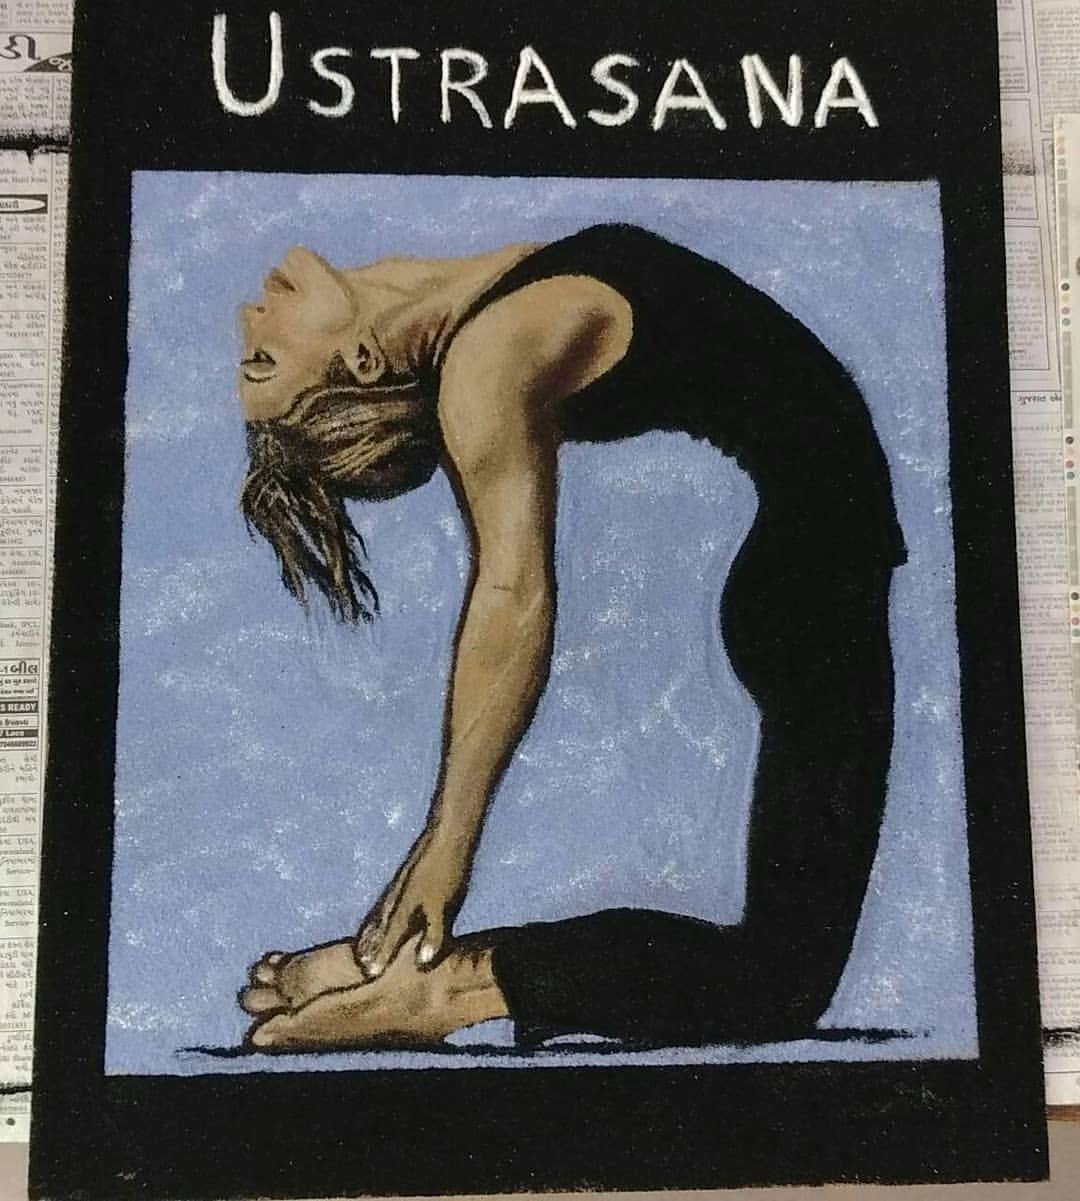 rangoli design ustrasana international yoga day